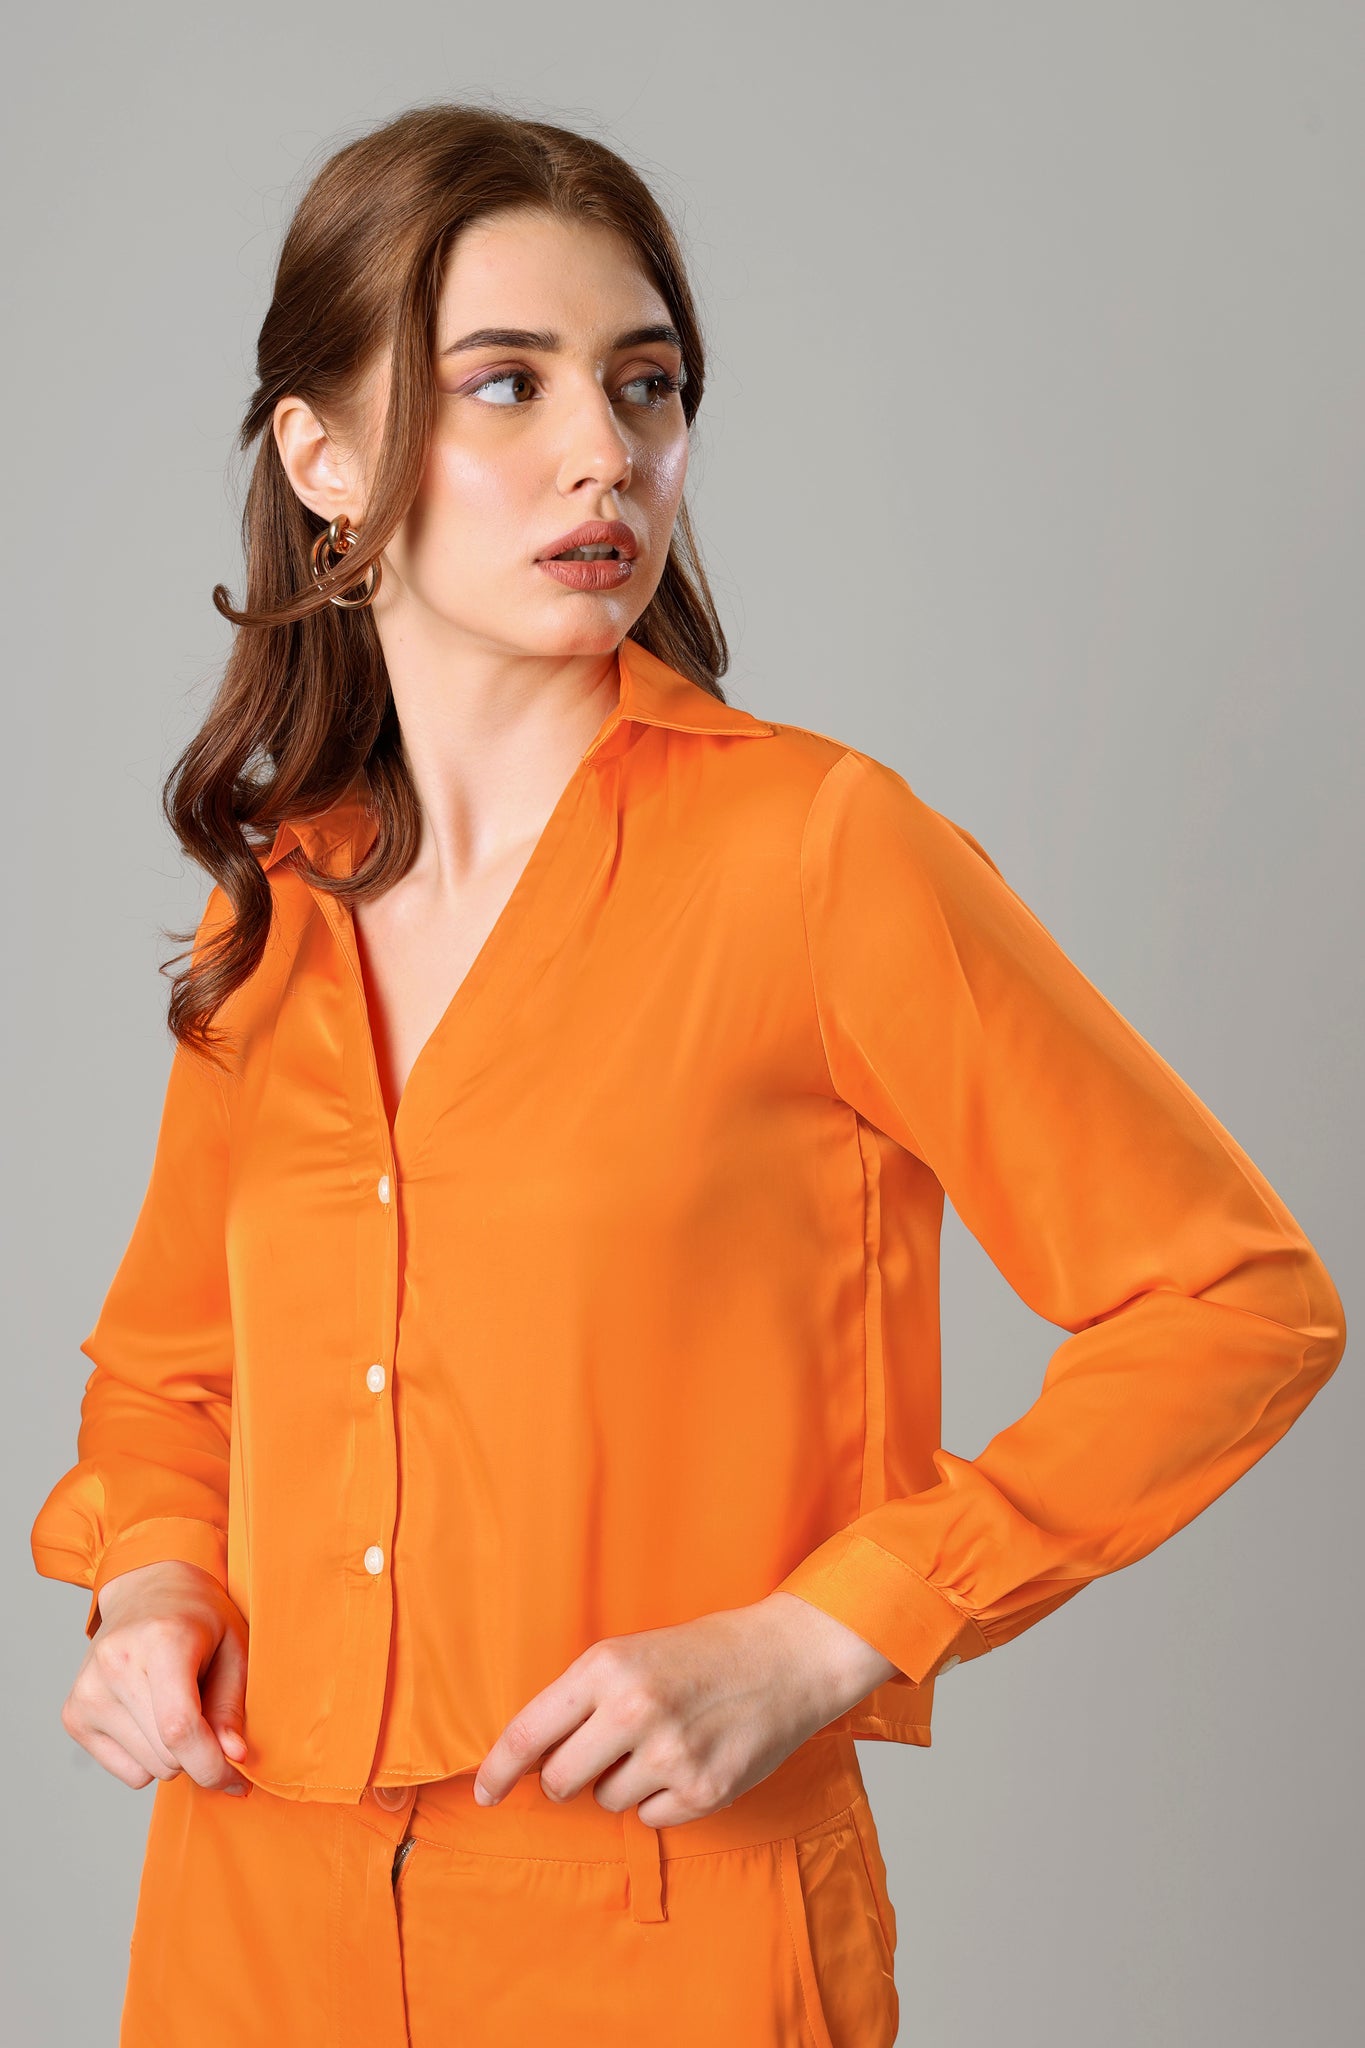 Sunset Orange Cropped Shirt Co-Ord Set For Women